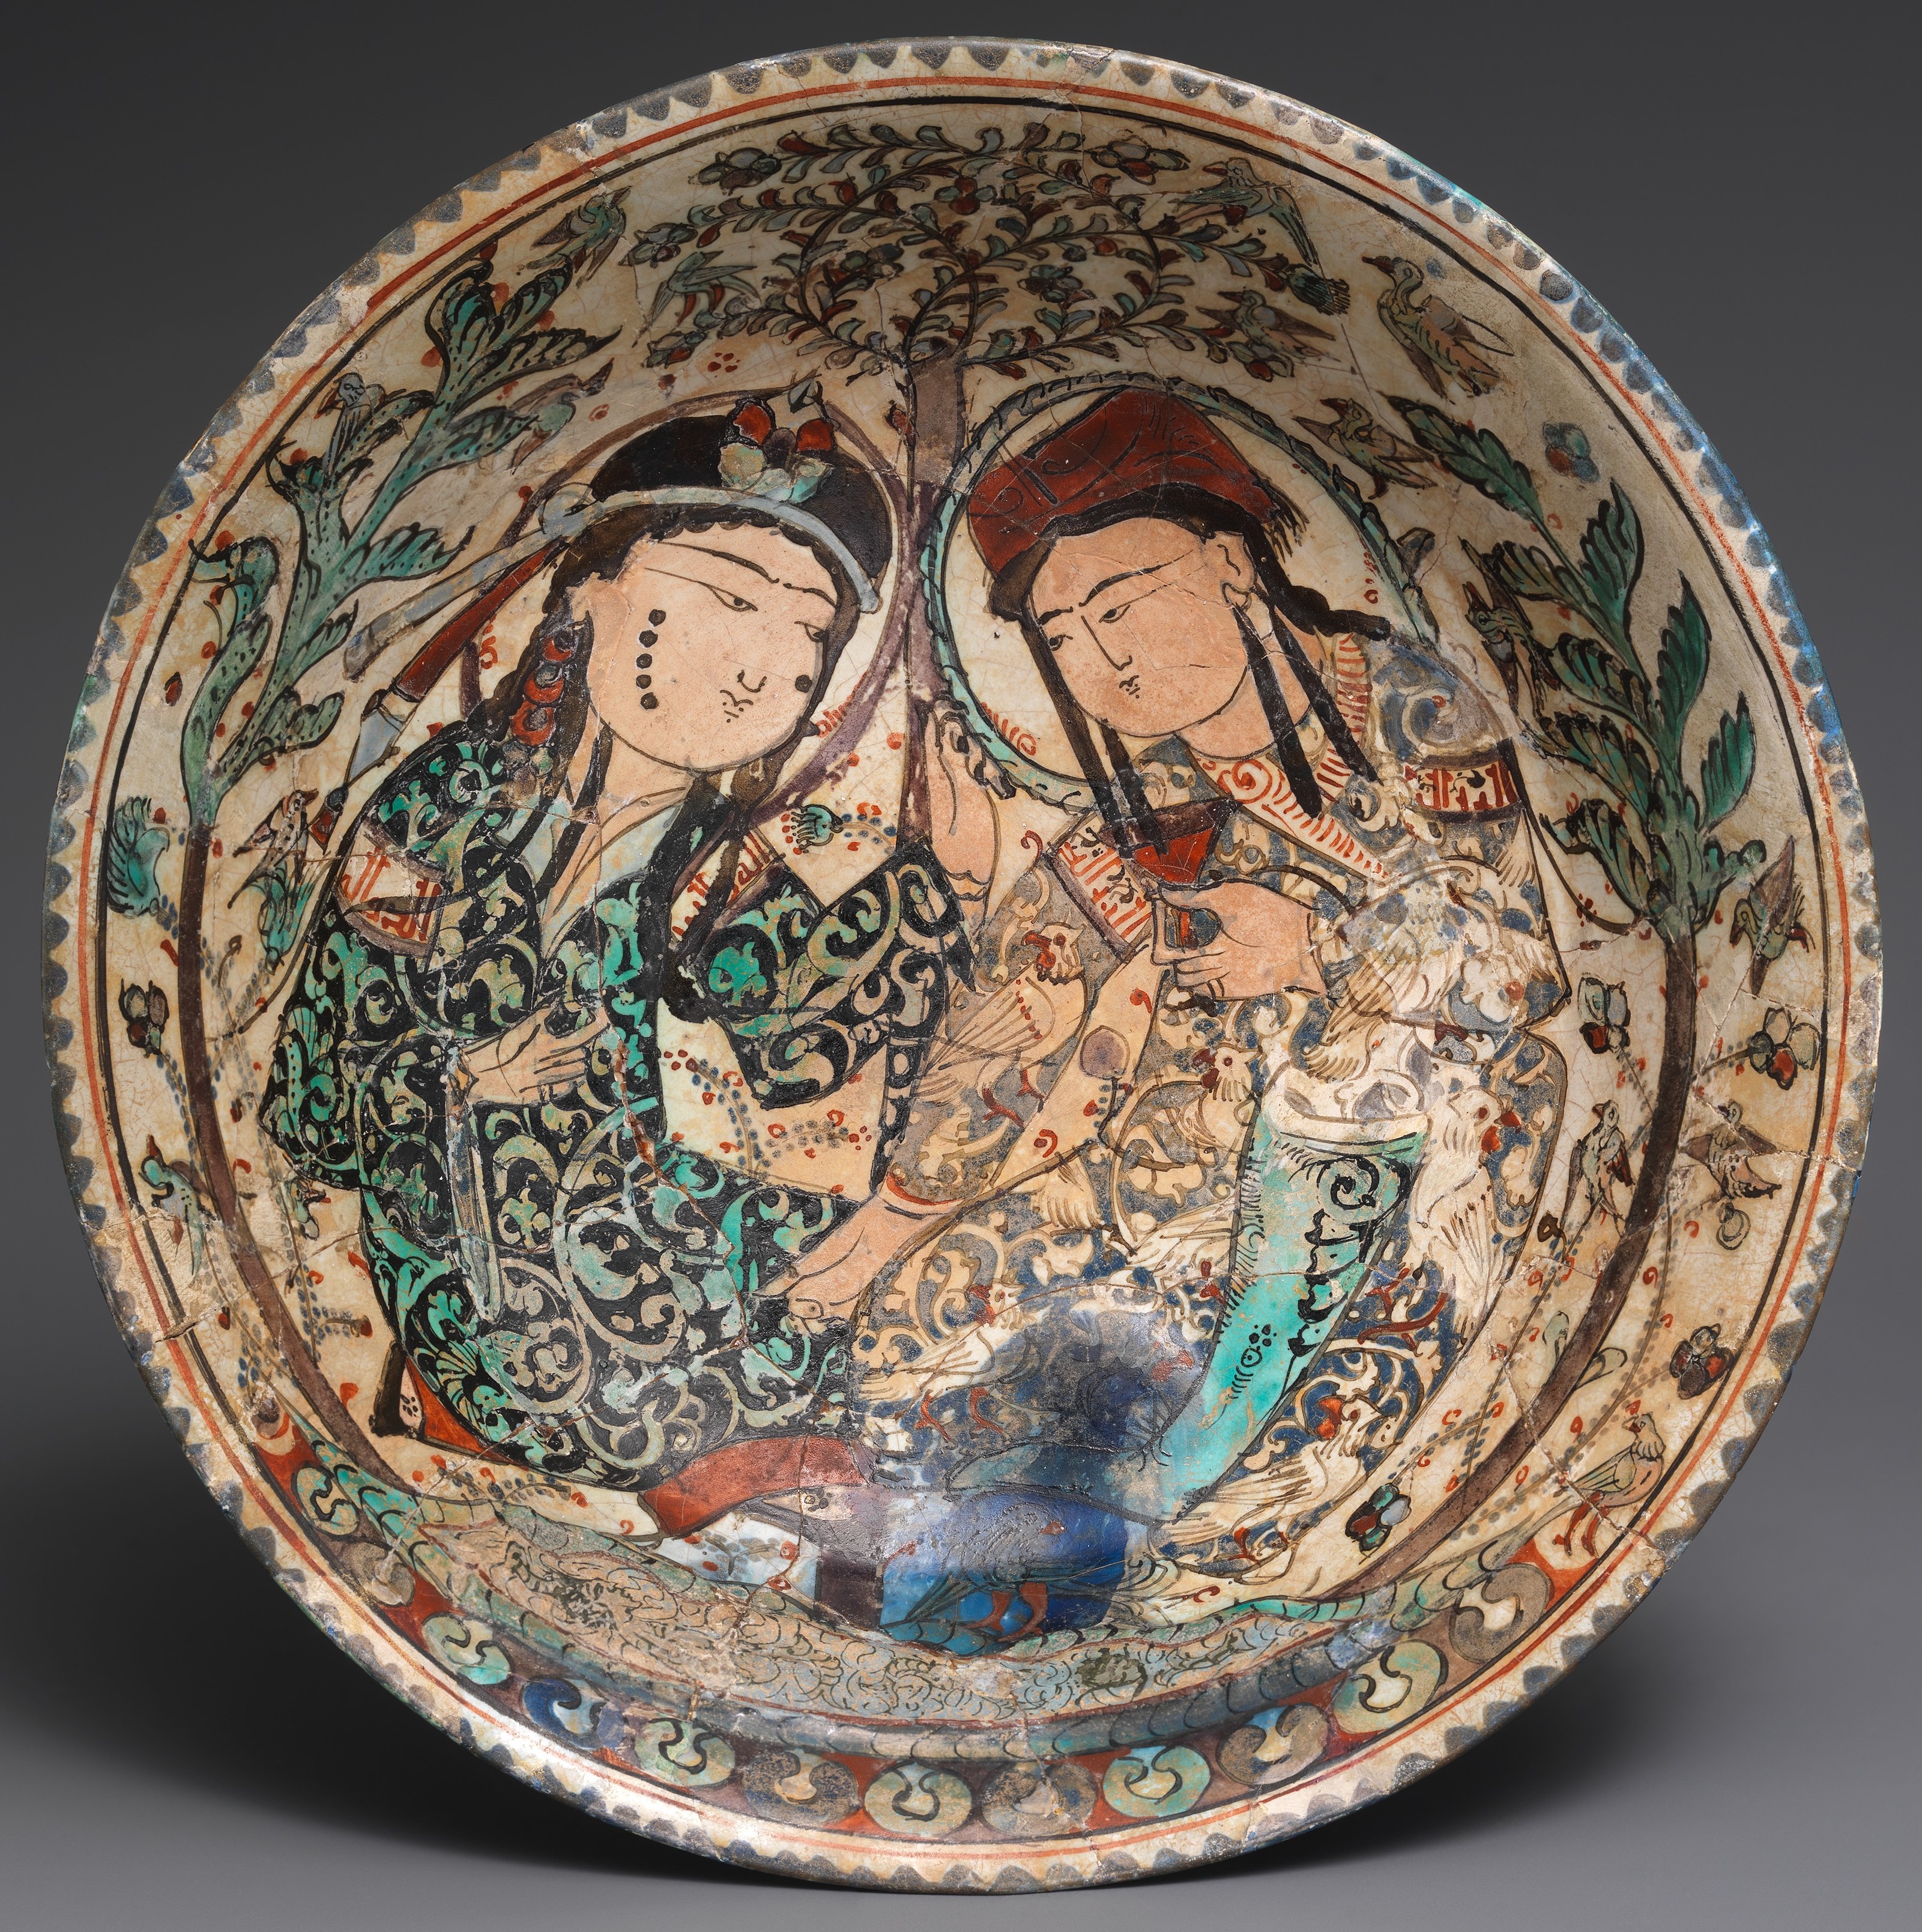 Ceramic art - Wikipedia